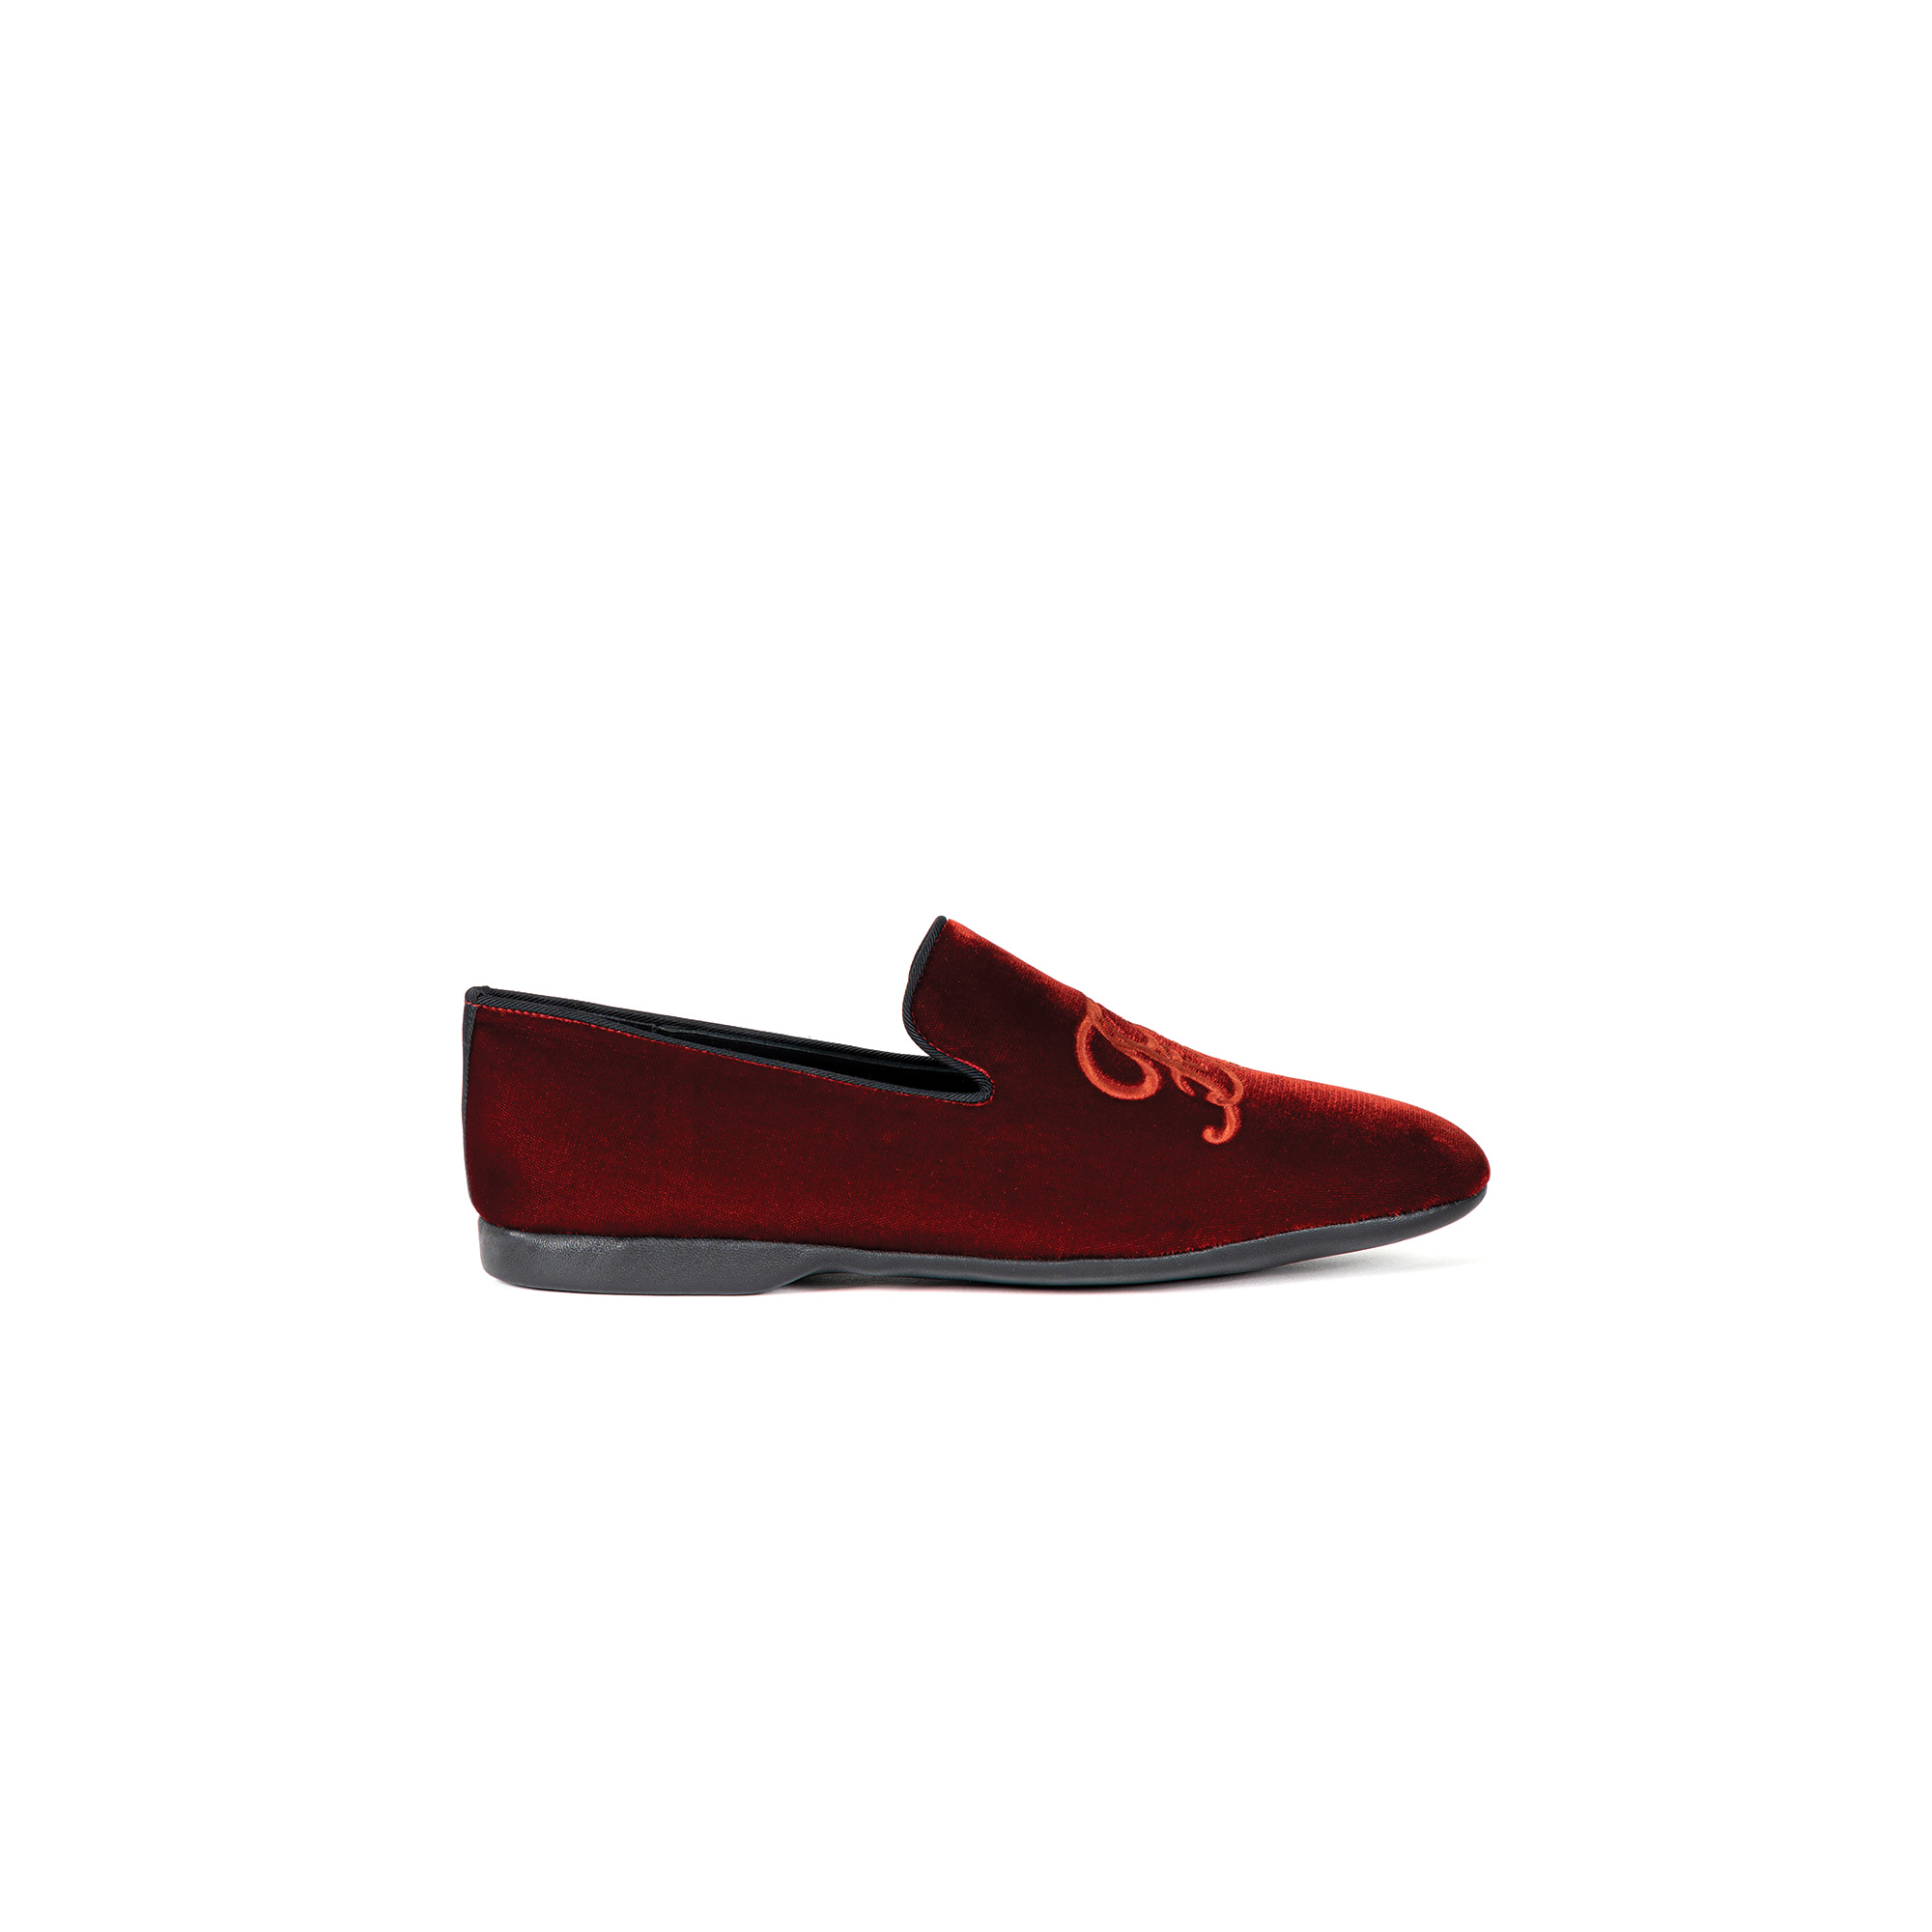 Pantofola interno sera in velluto arancione - Farfalla italian slippers